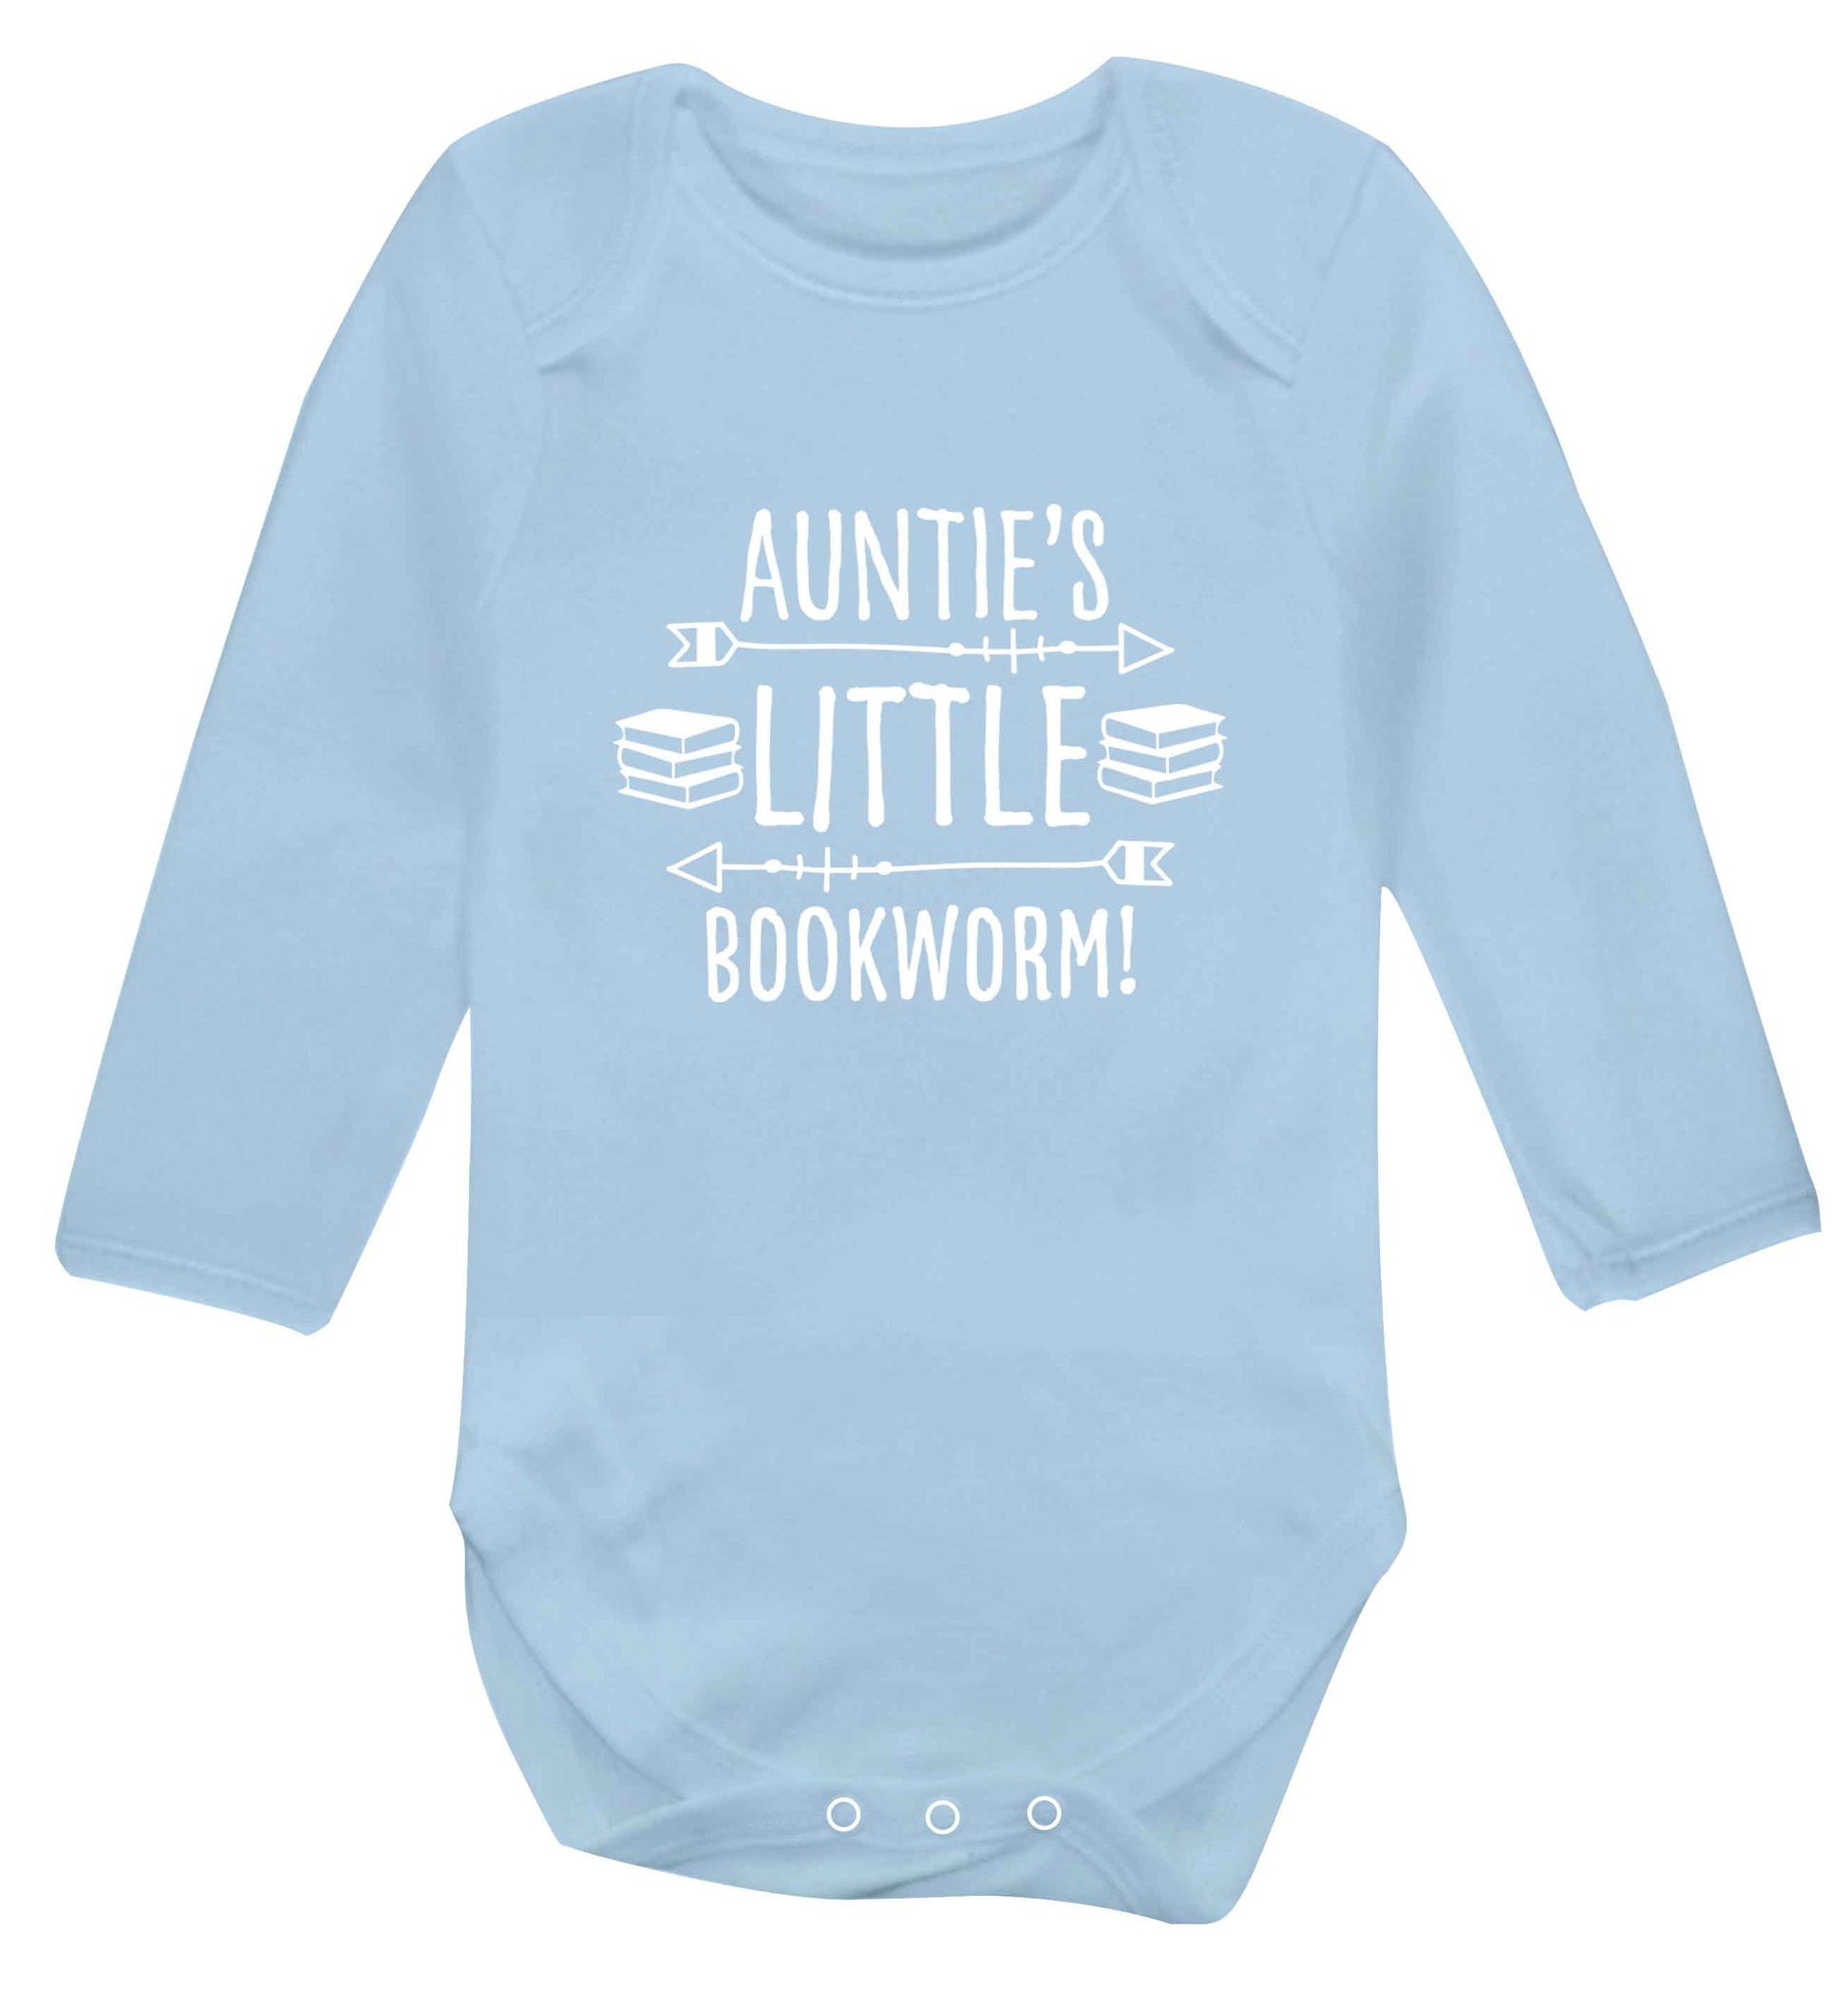 Auntie's little bookworm baby vest long sleeved pale blue 6-12 months